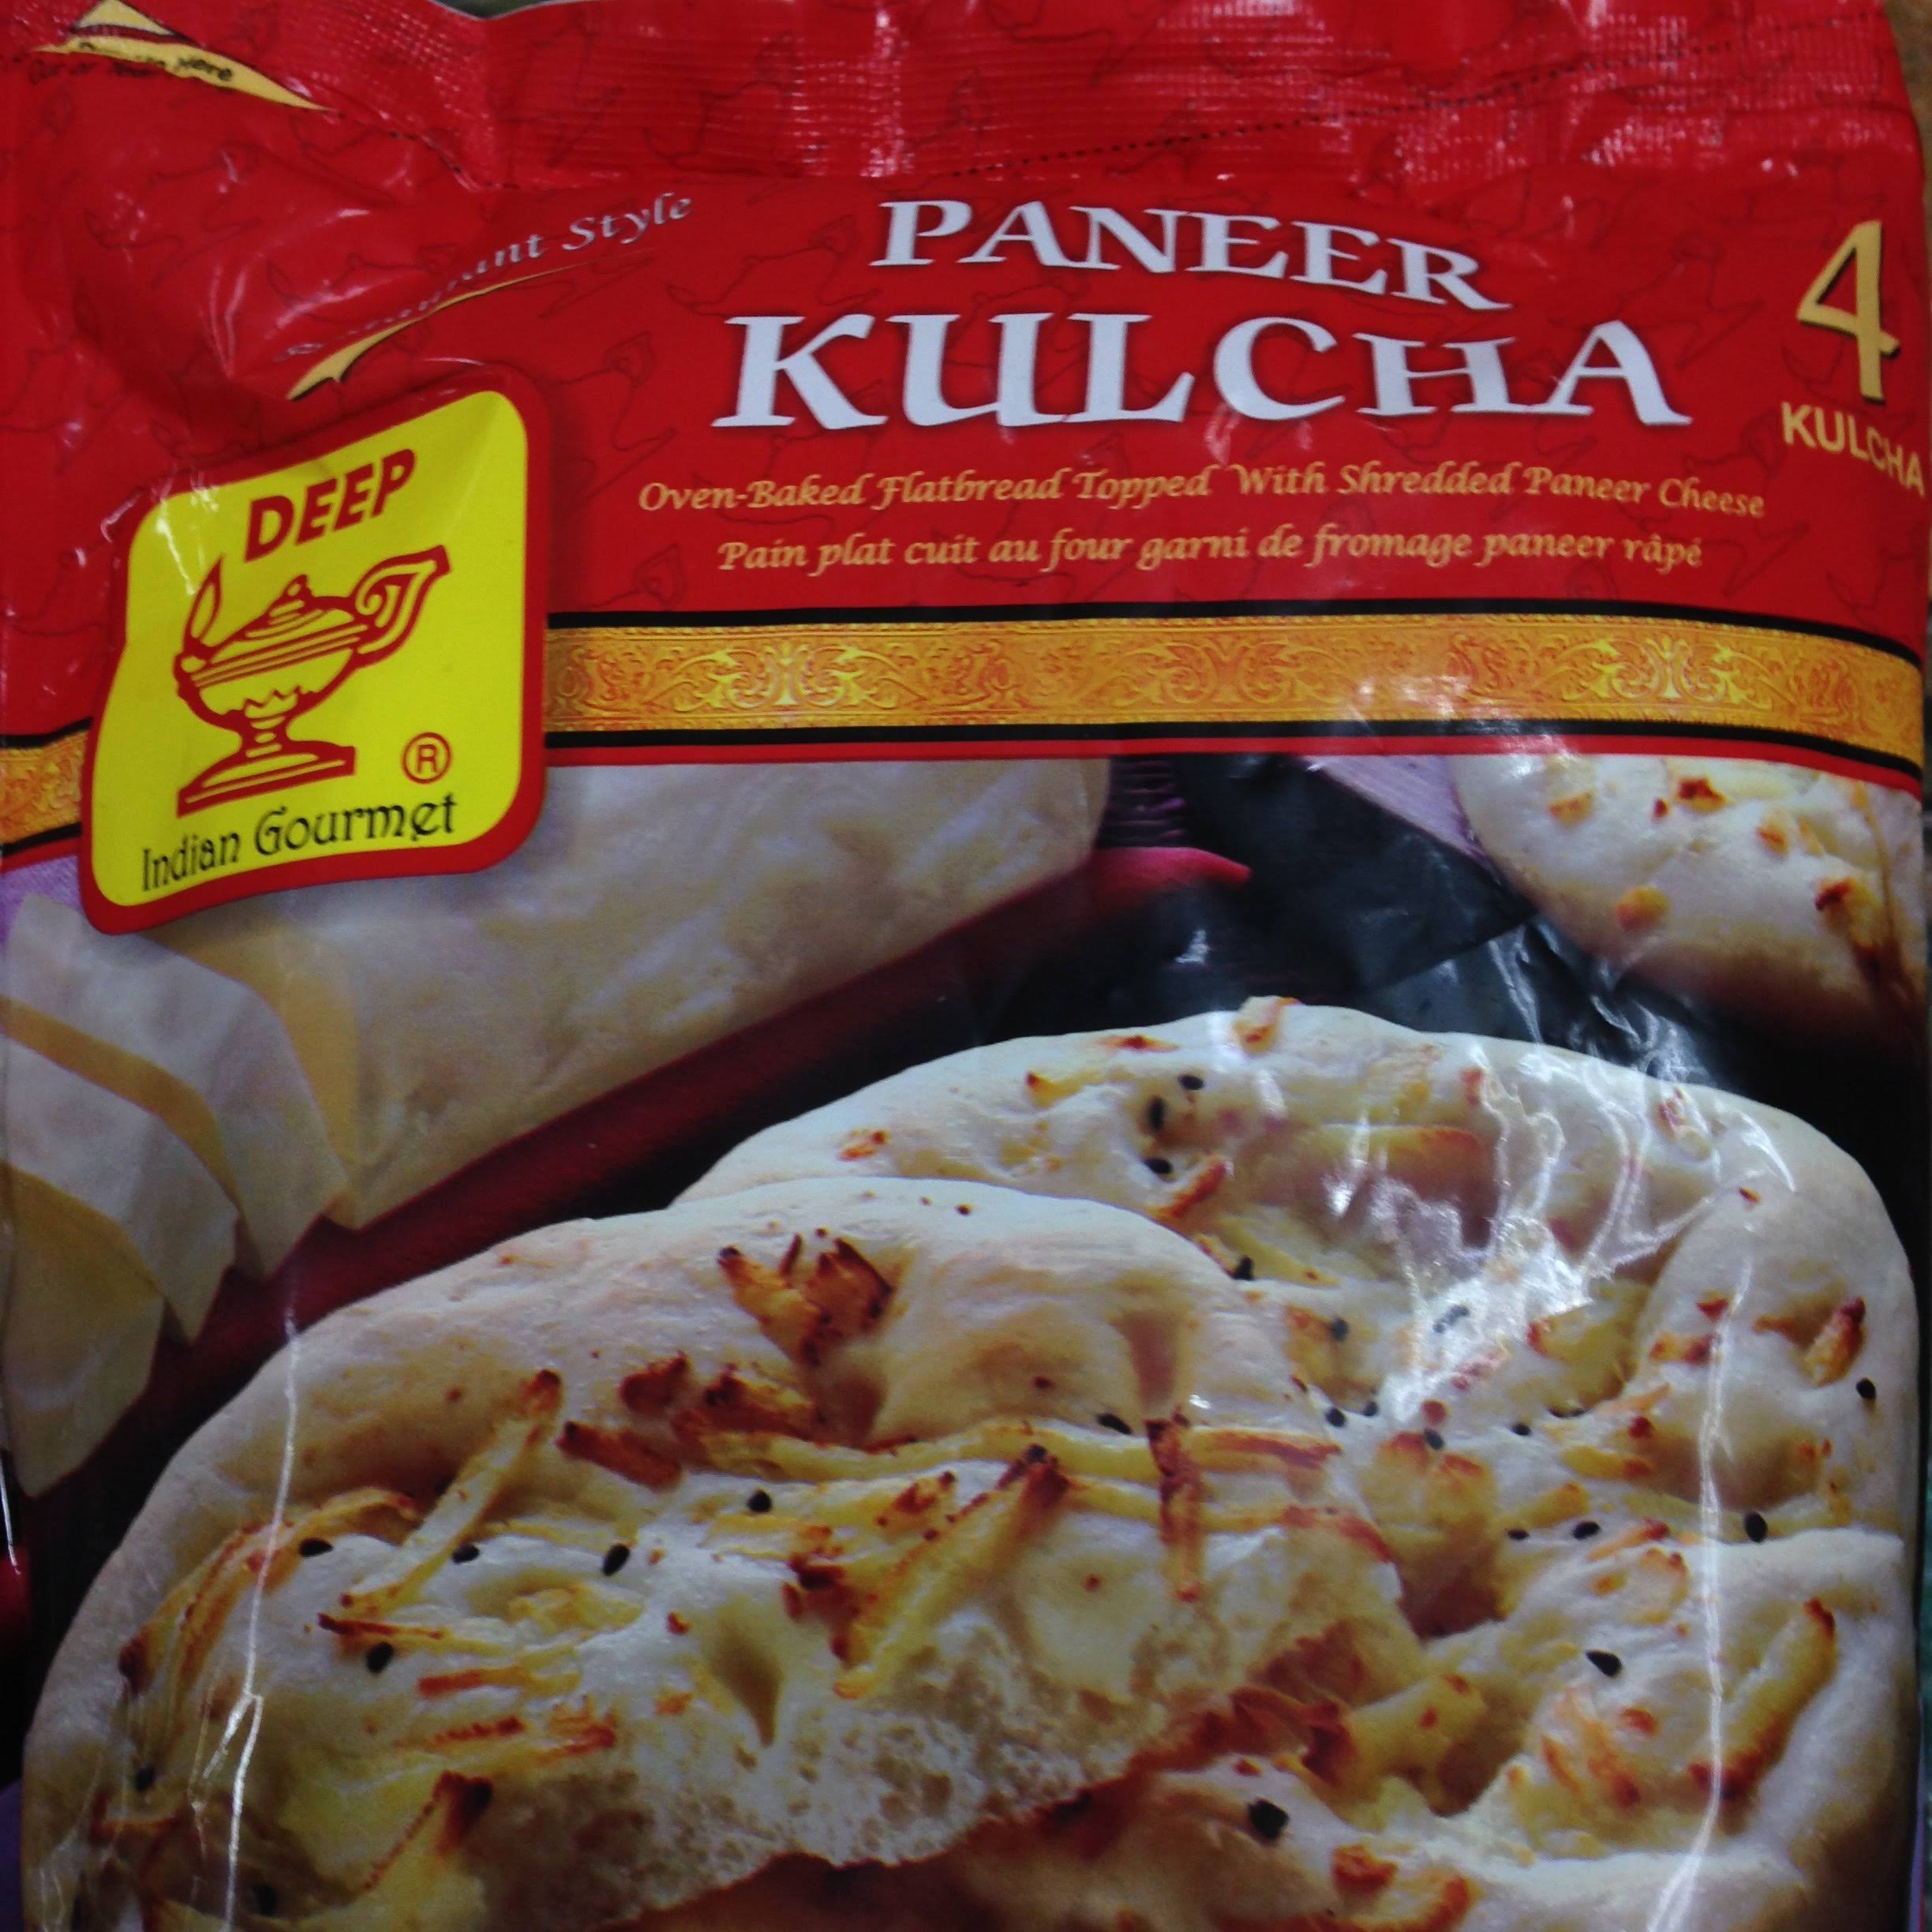 Deep Foods Paneer Kulcha